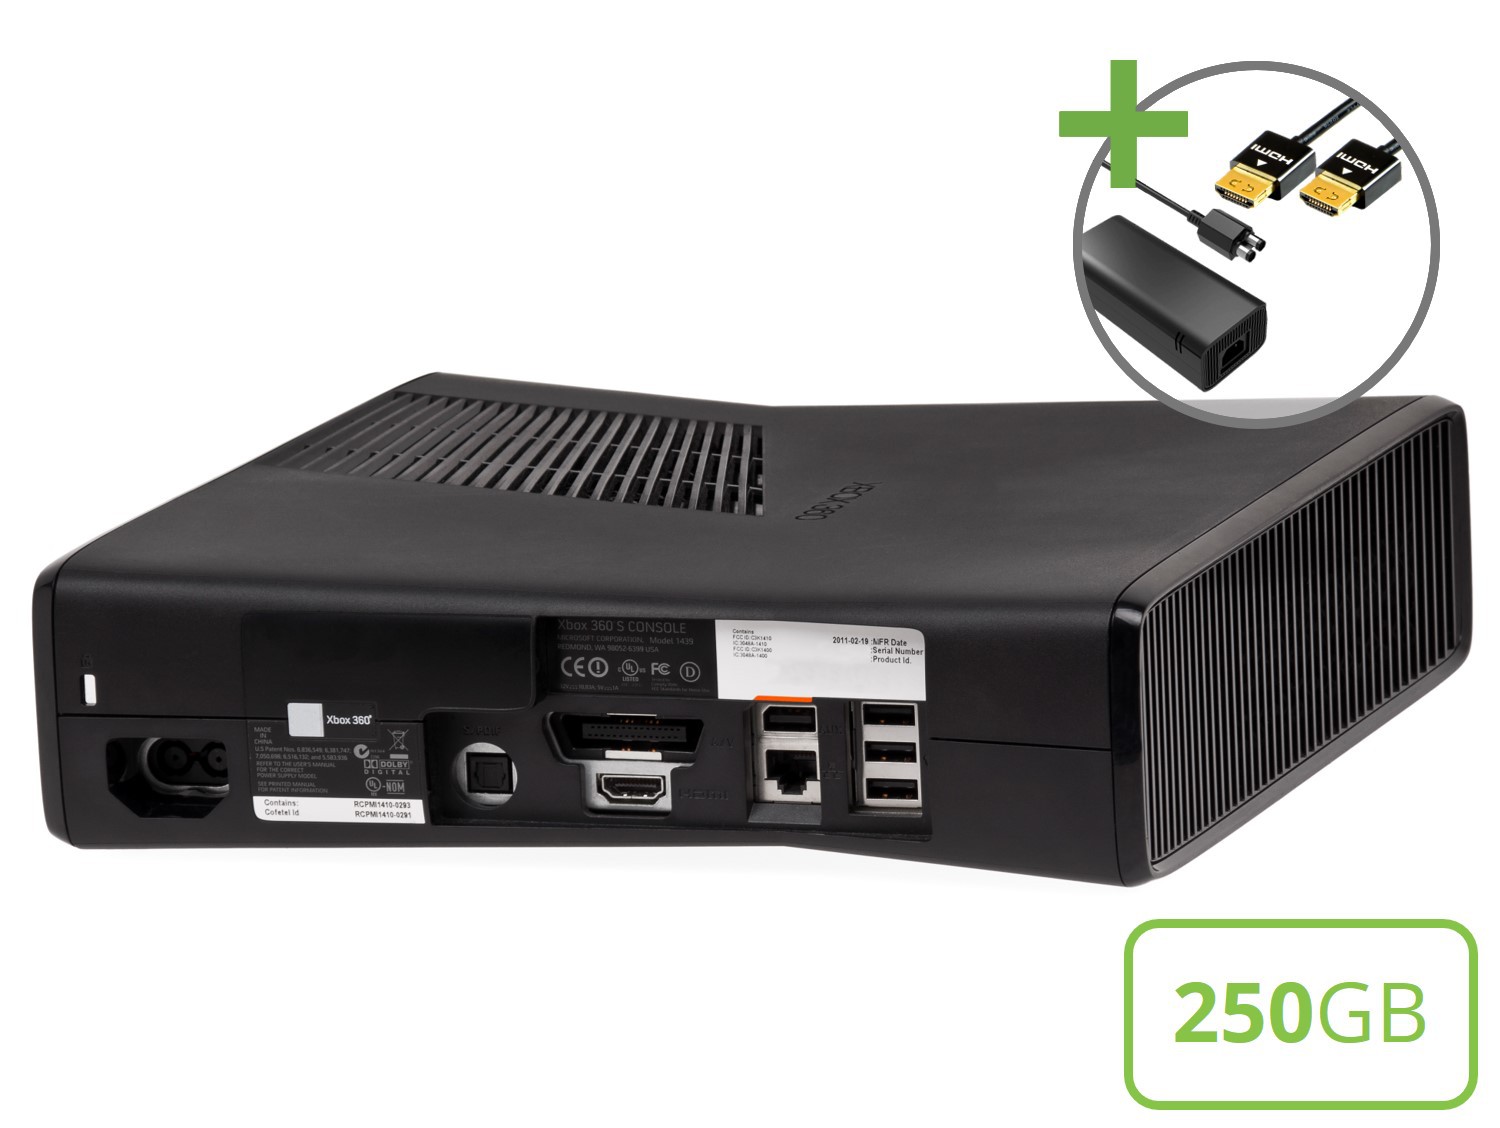 Microsoft Xbox 360 Slim Starter Pack - Forza 3 and Crisis 2 Edition - Xbox 360 Hardware - 3